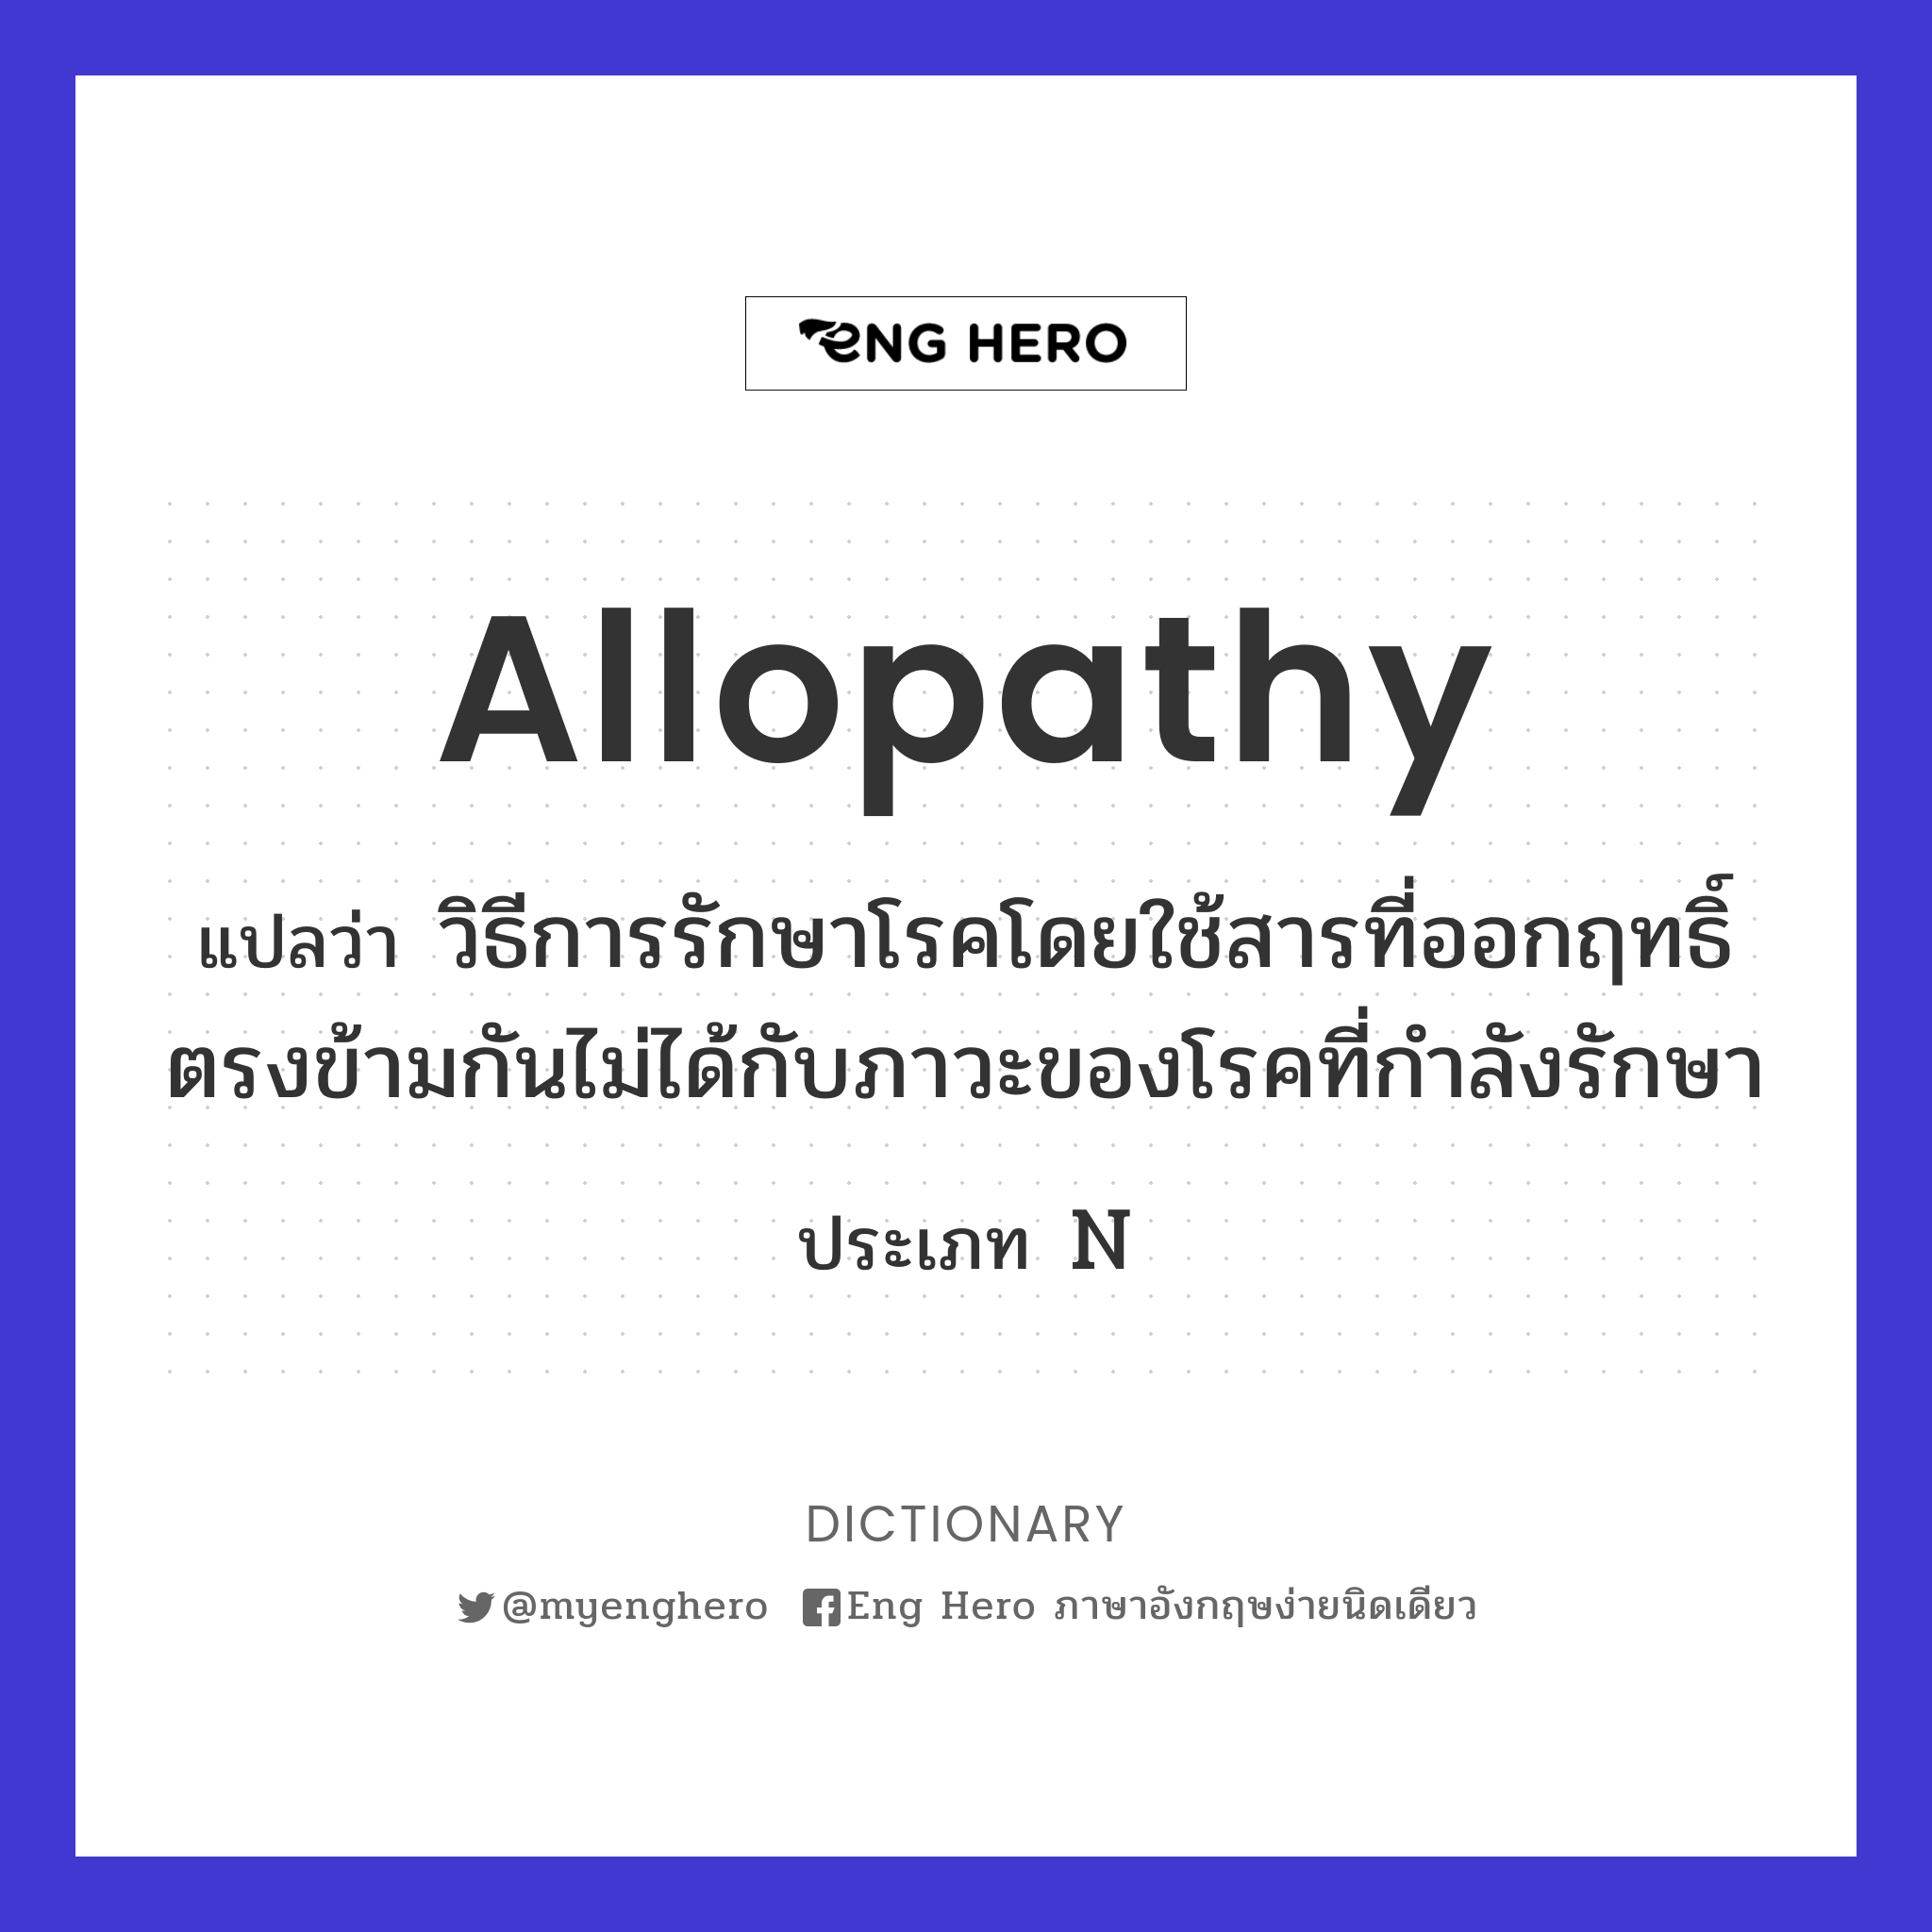 allopathy